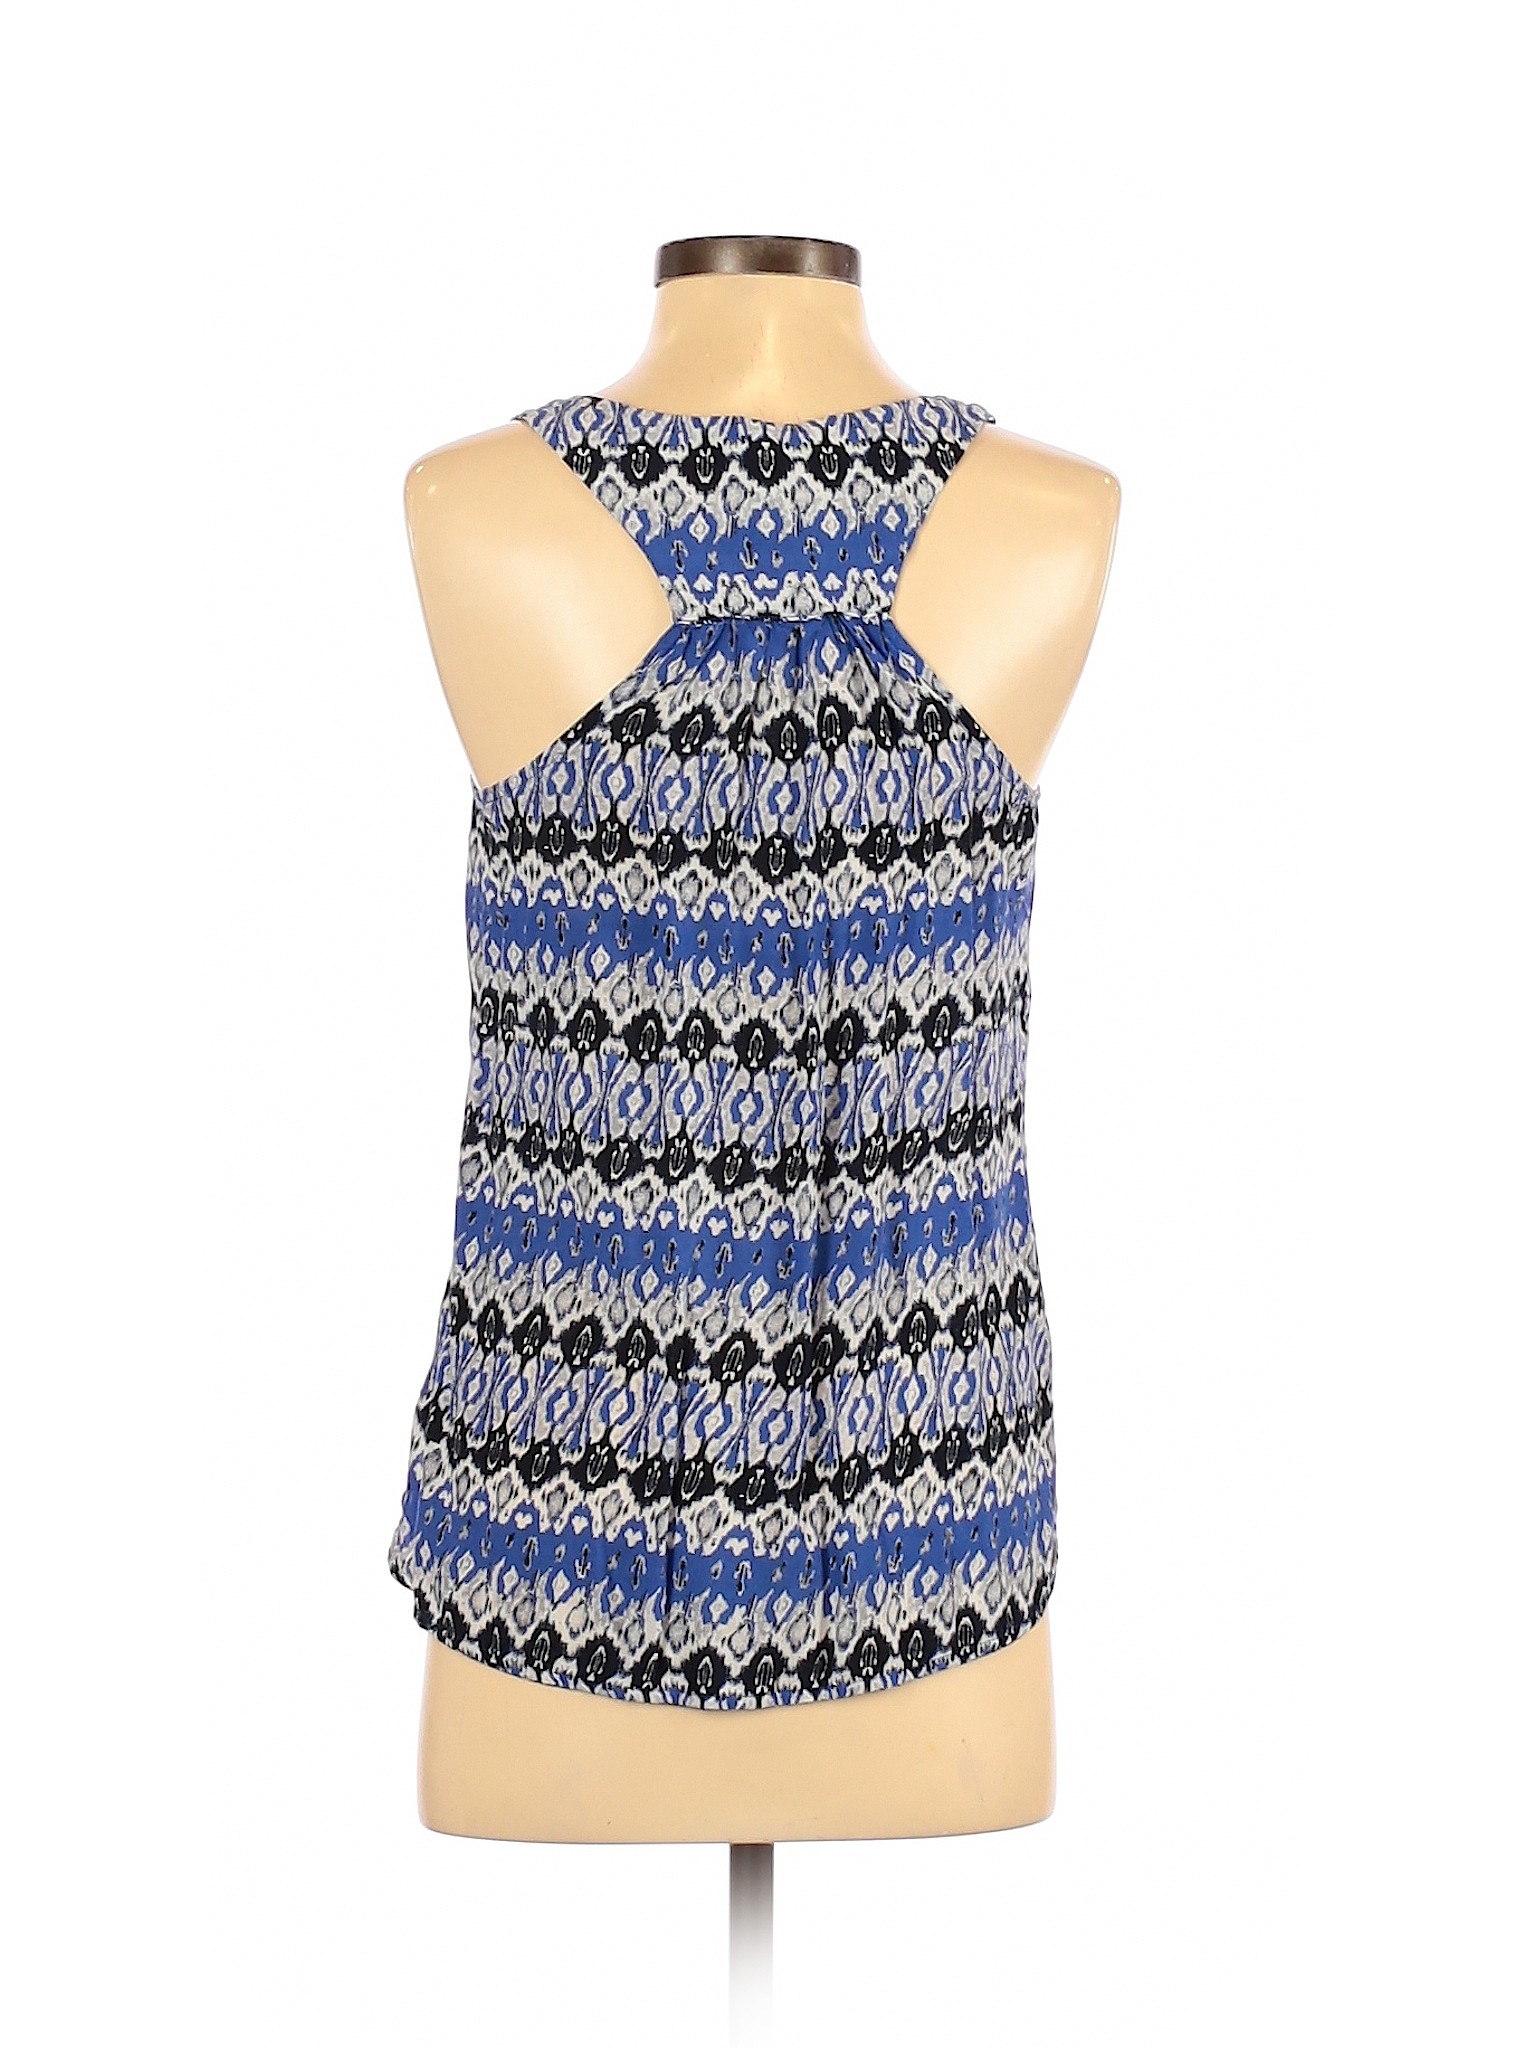 Cynthia by Cynthia Rowley Women Blue Sleeveless Blouse S | eBay